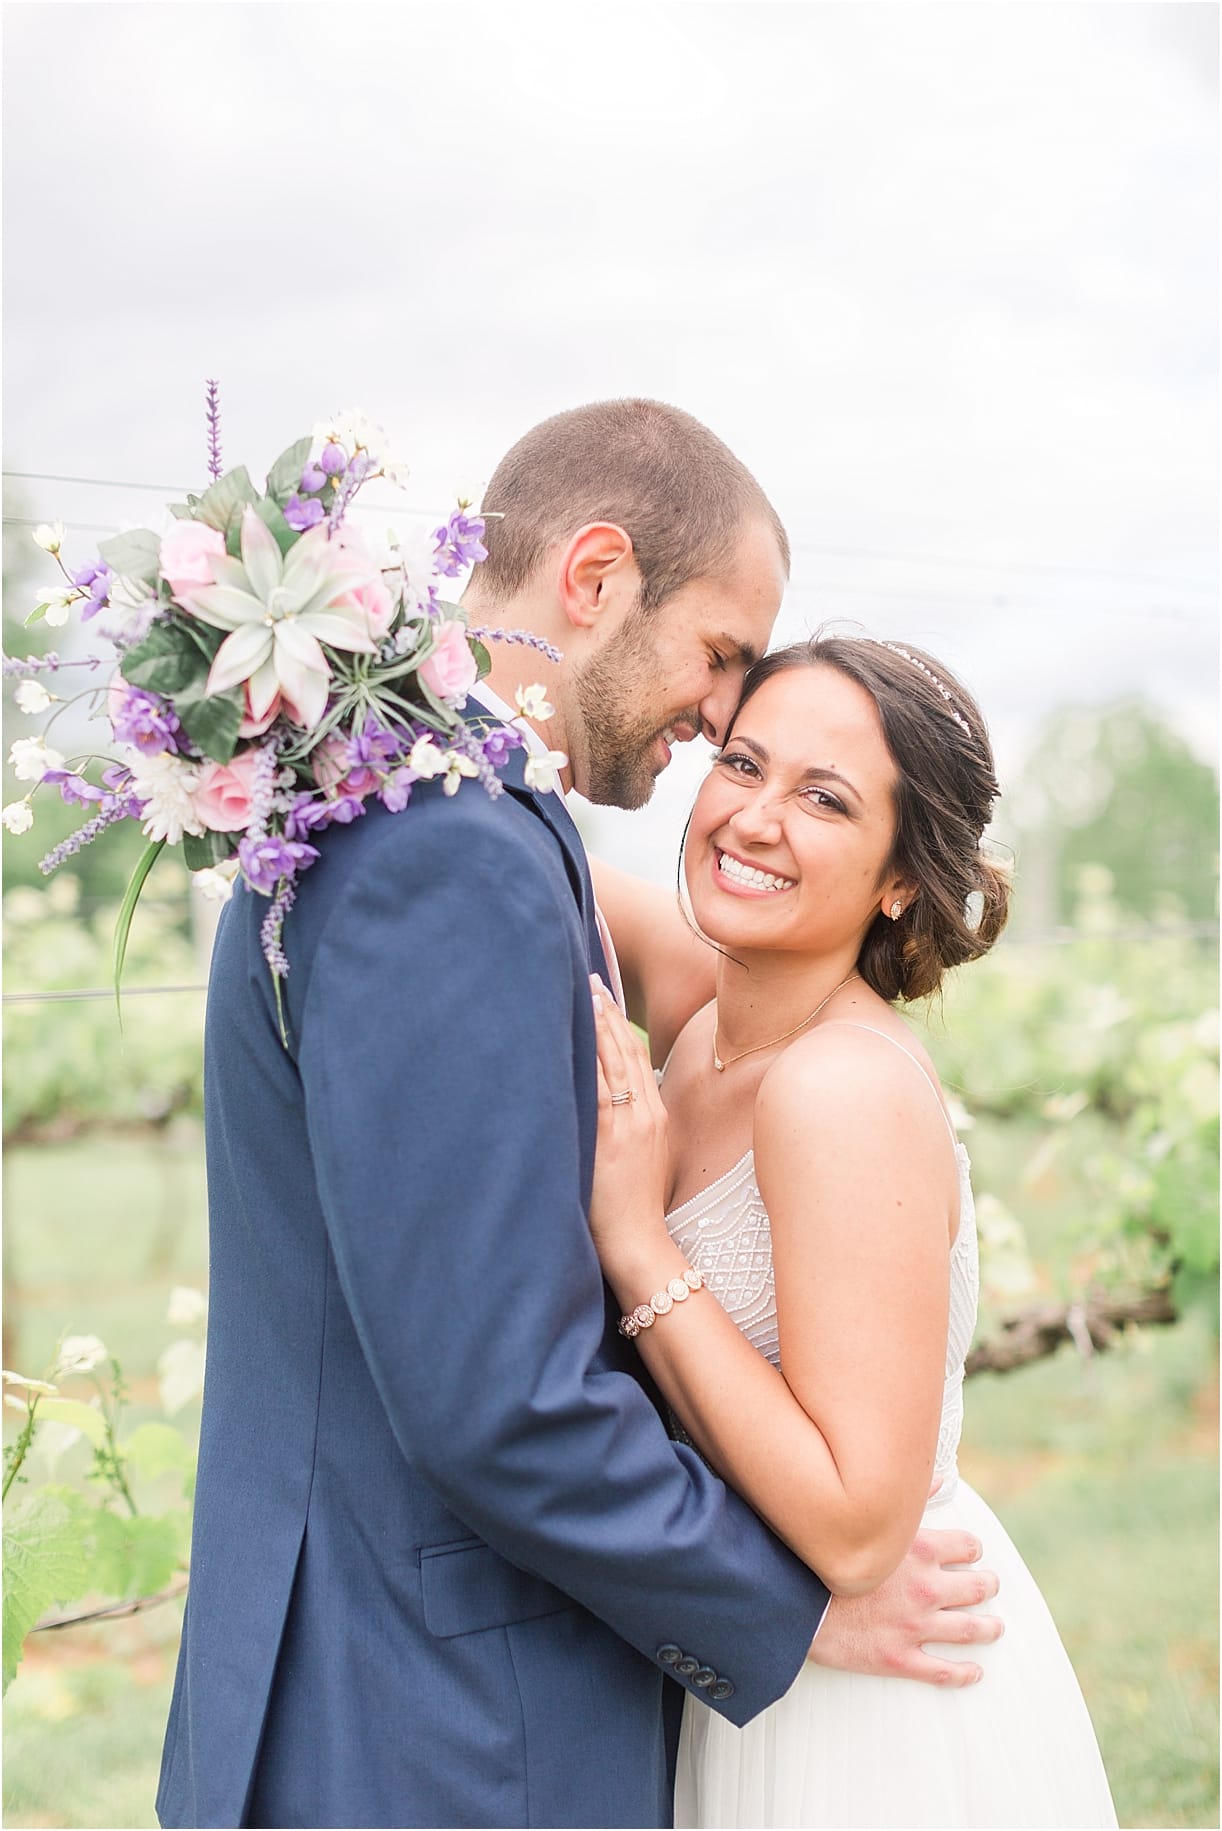 Spring Vineyard Wedding | Hill City Bride Virginia Wedding Blog - Jessica Green Photography - couple